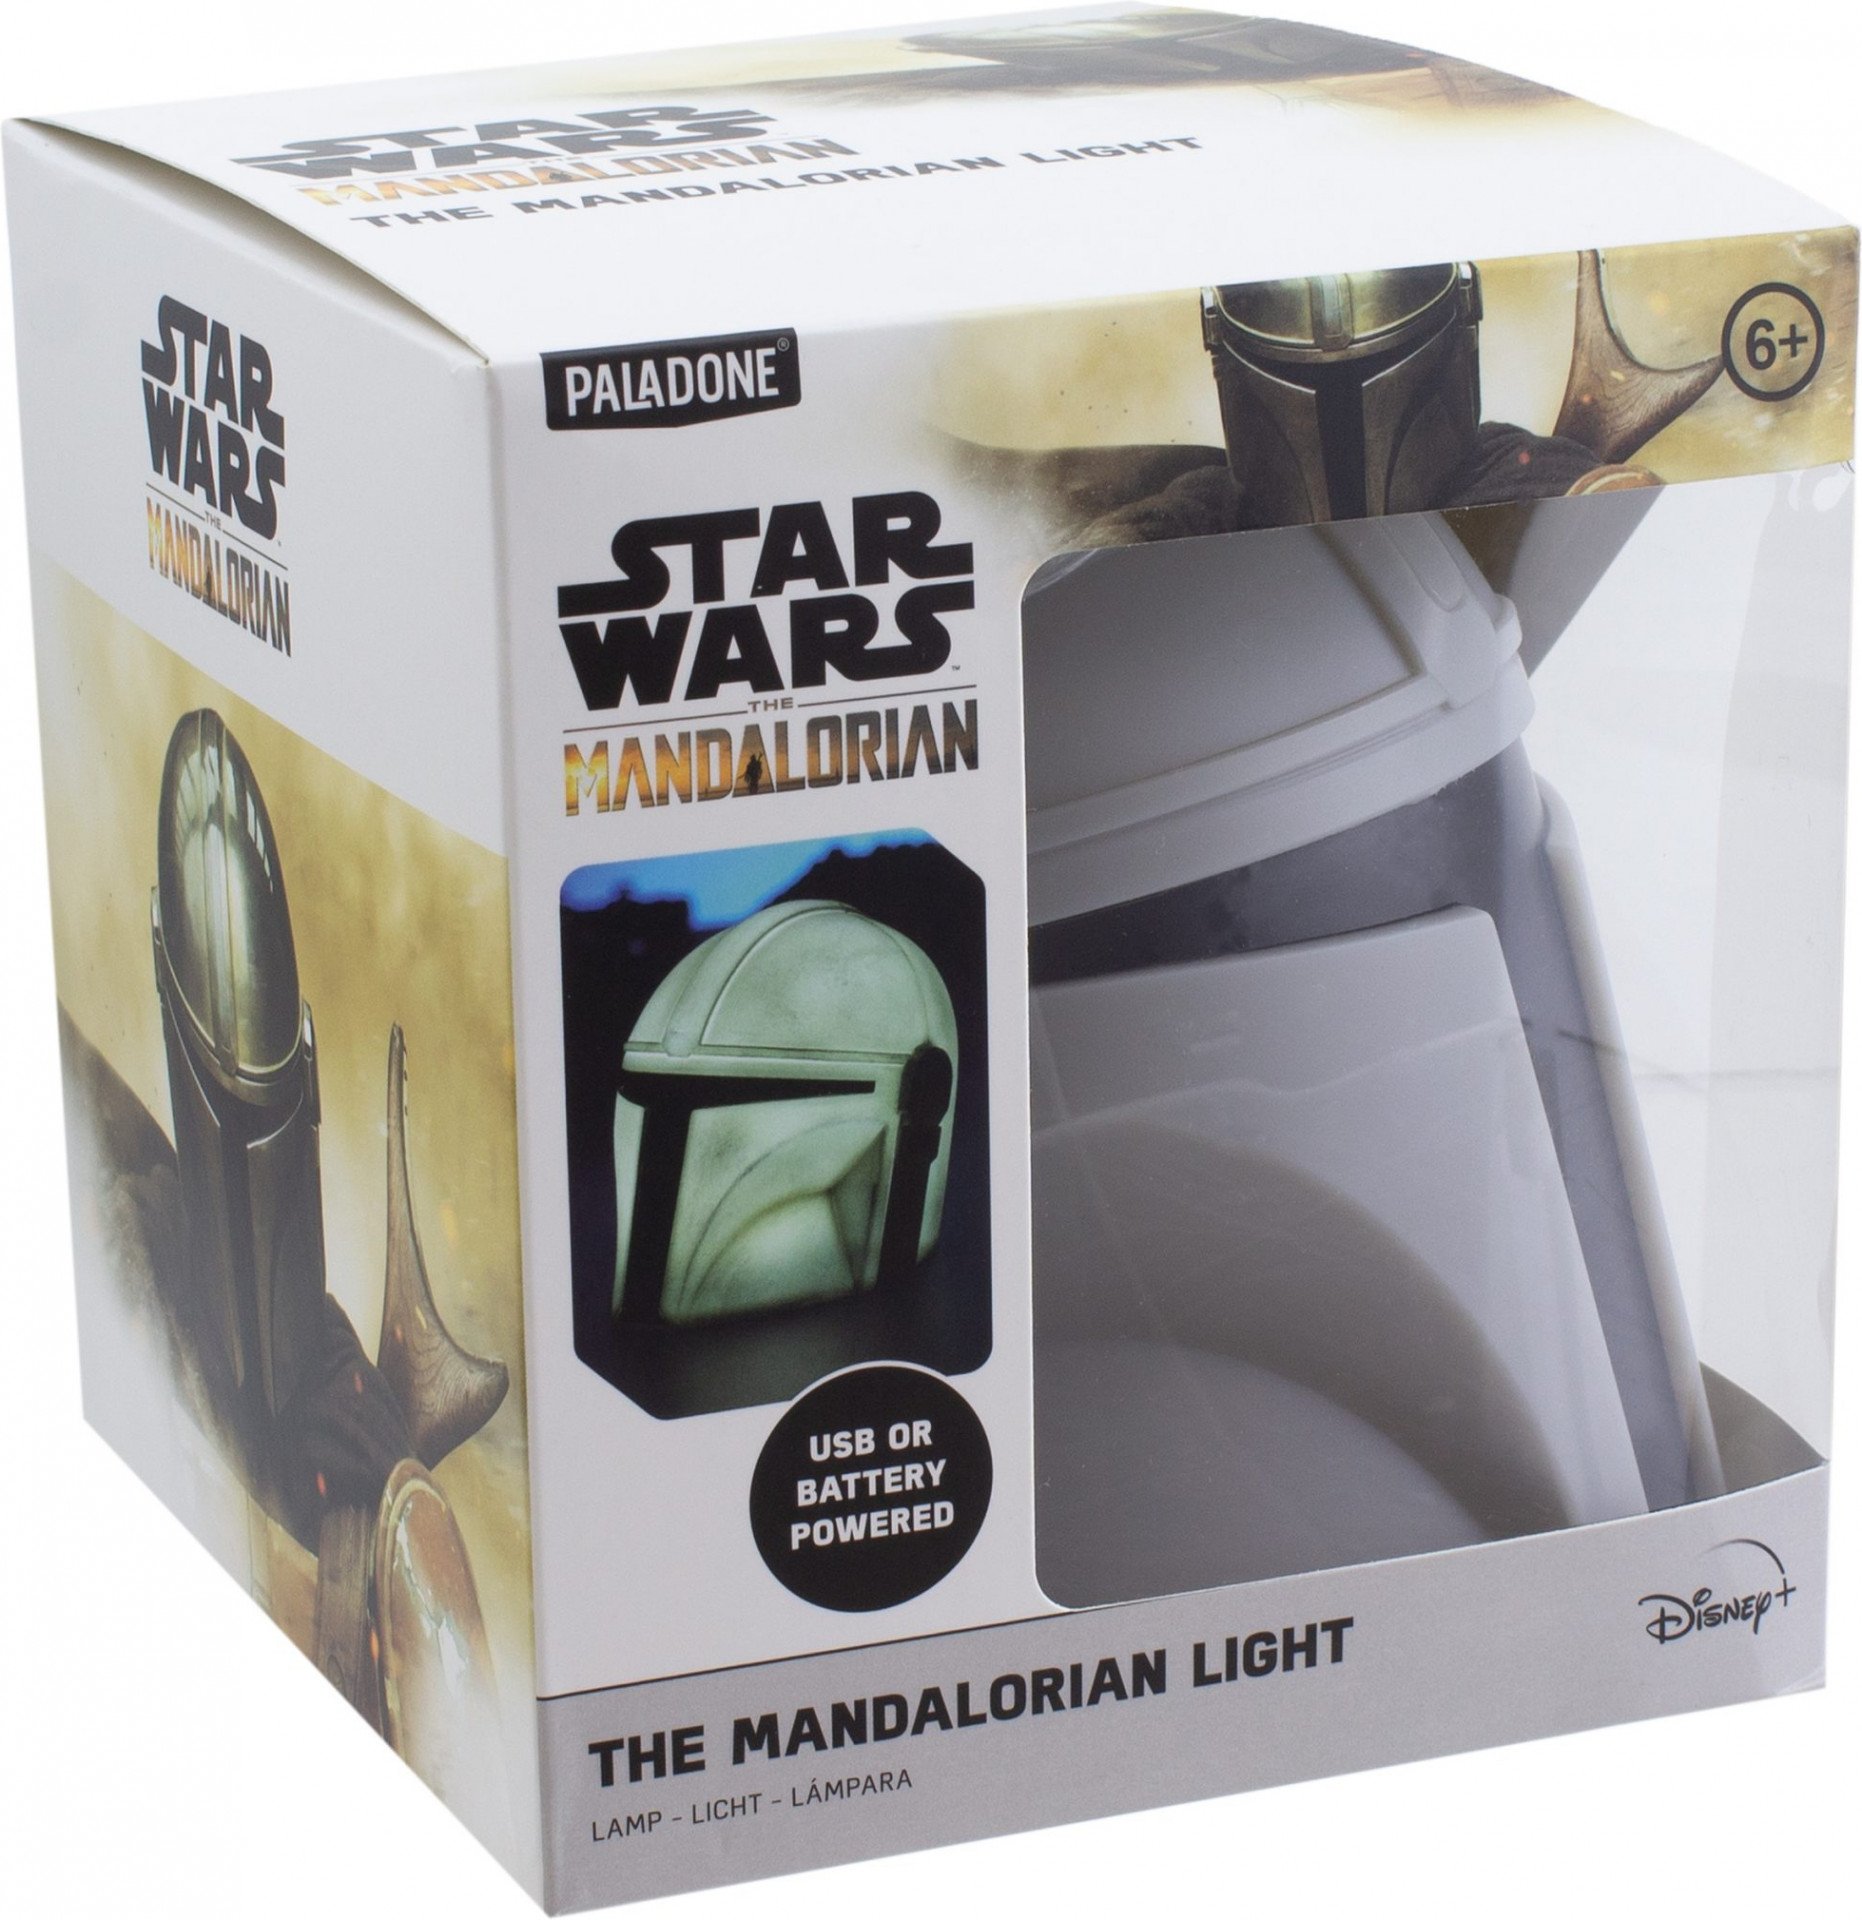 Star Wars the Mandalorian - The Mandalorian Desktop Light